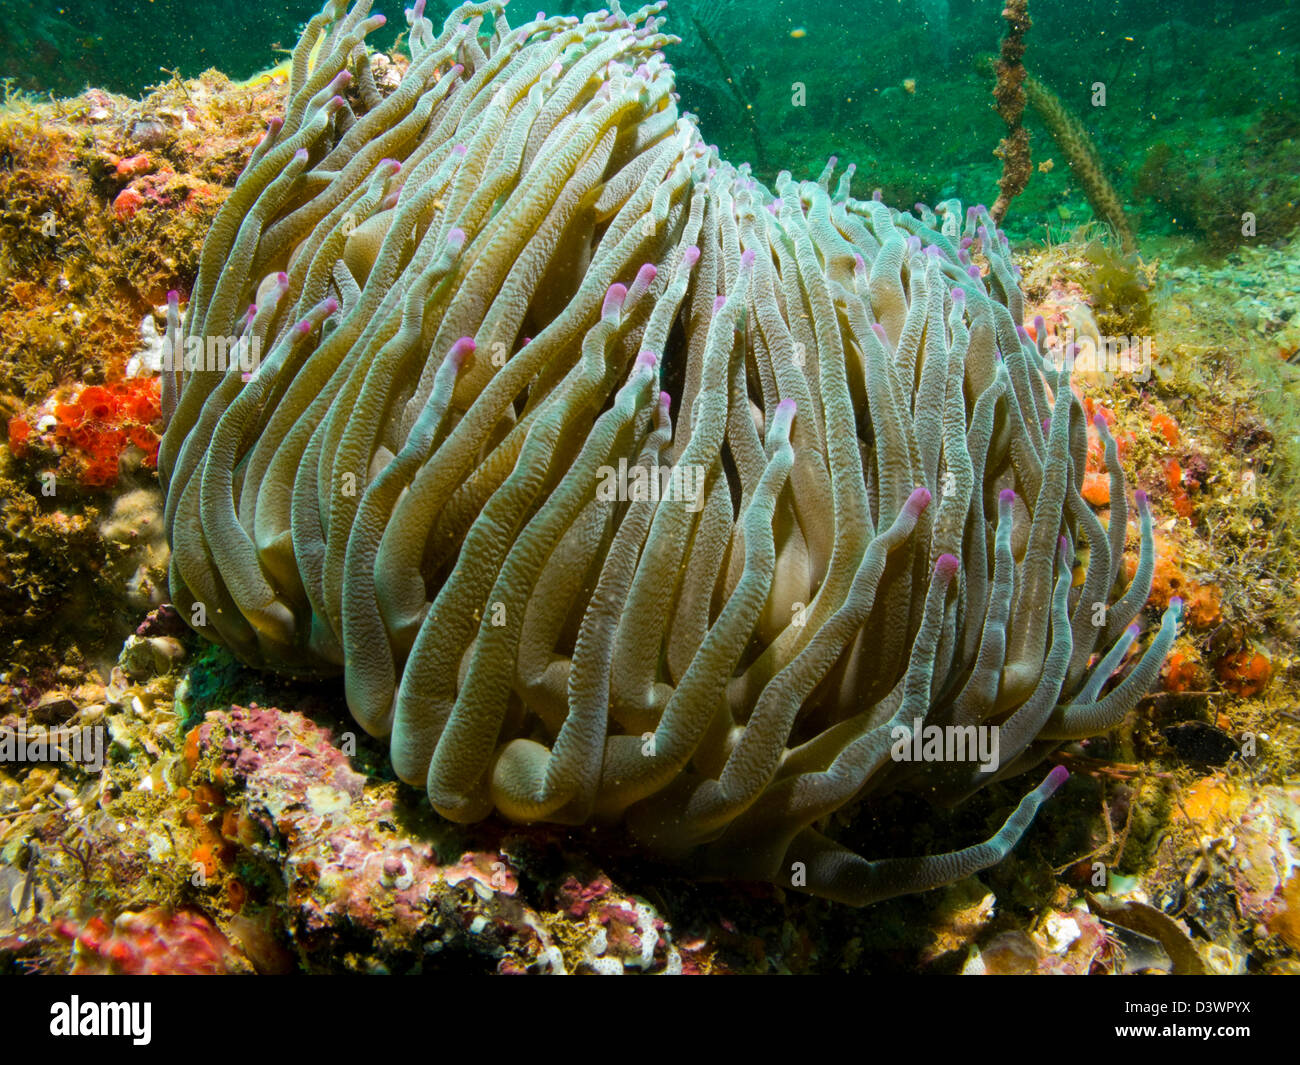 Condylactis gigantea tropical species of ball anemone. Guarapari Escalvada island, Espirito Santo state, Brazil Stock Photo